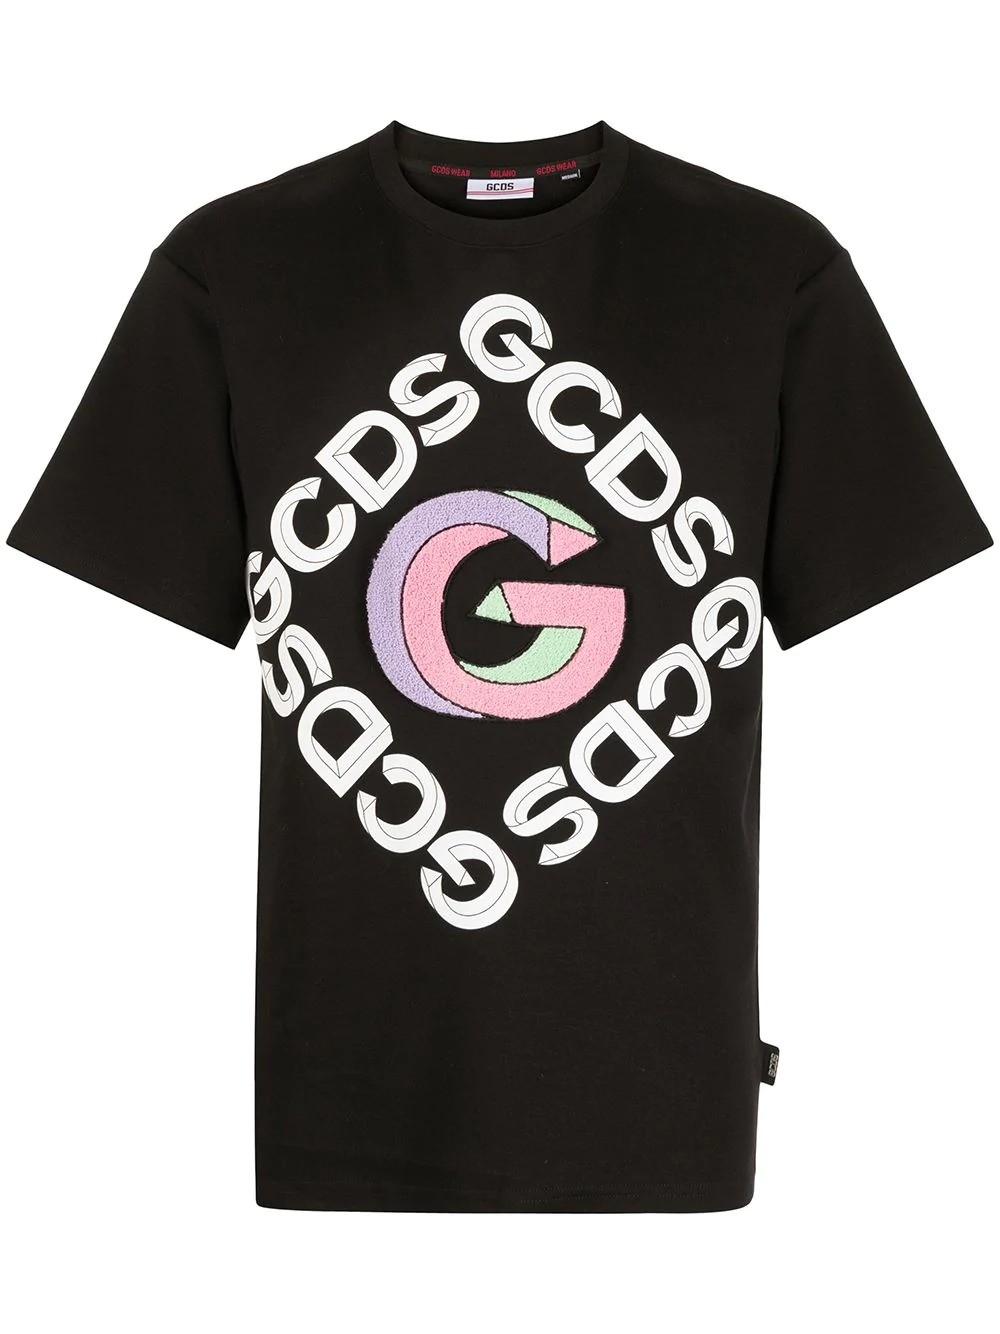 Gcds Cotton Logo Print T-shirt in Black for Men - Lyst